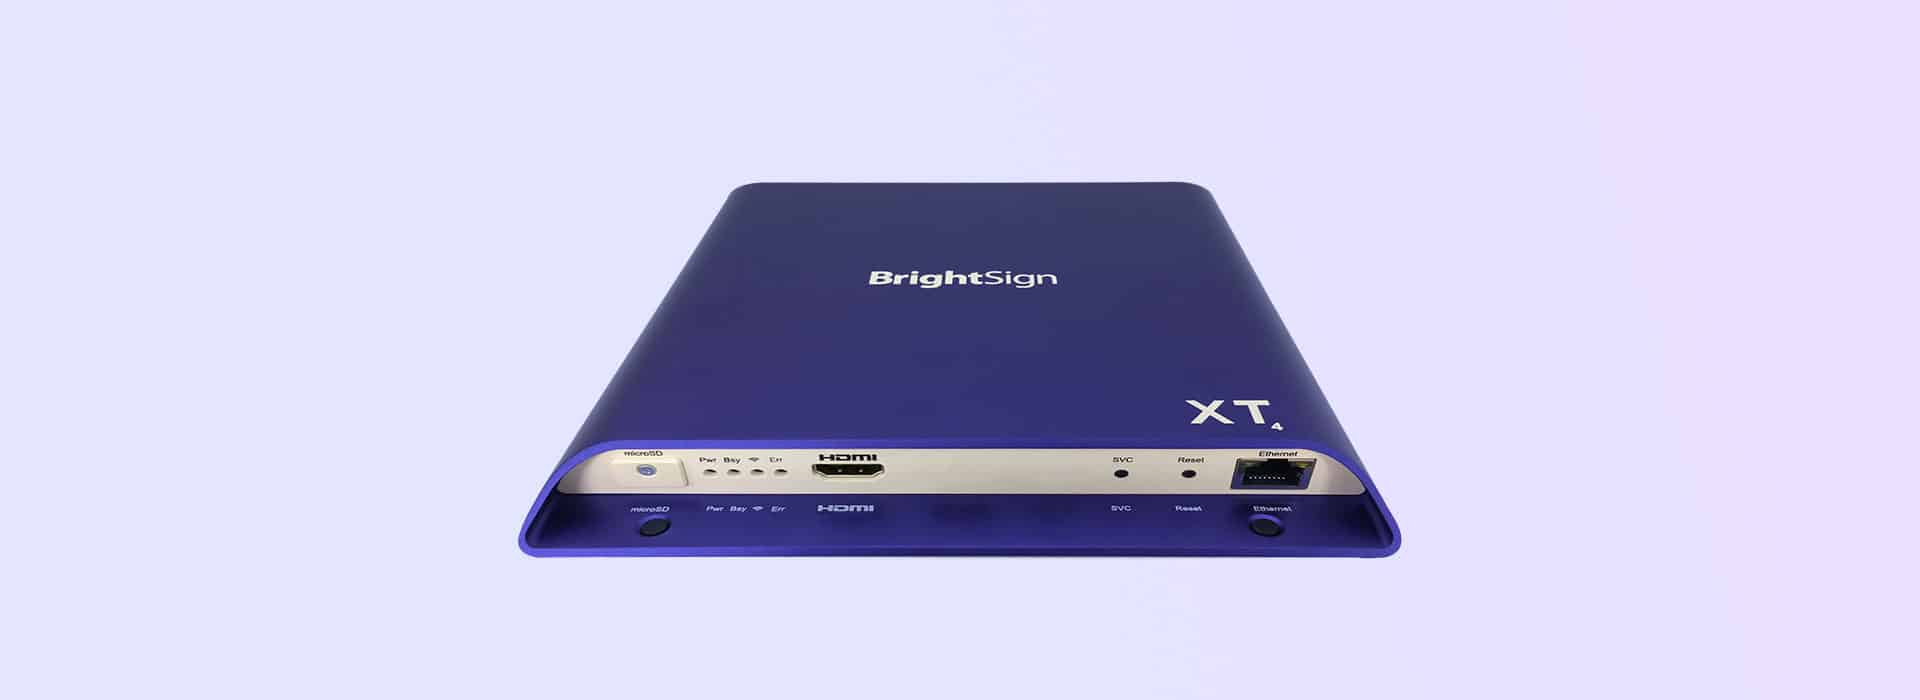 Brightsign 4er Series 4